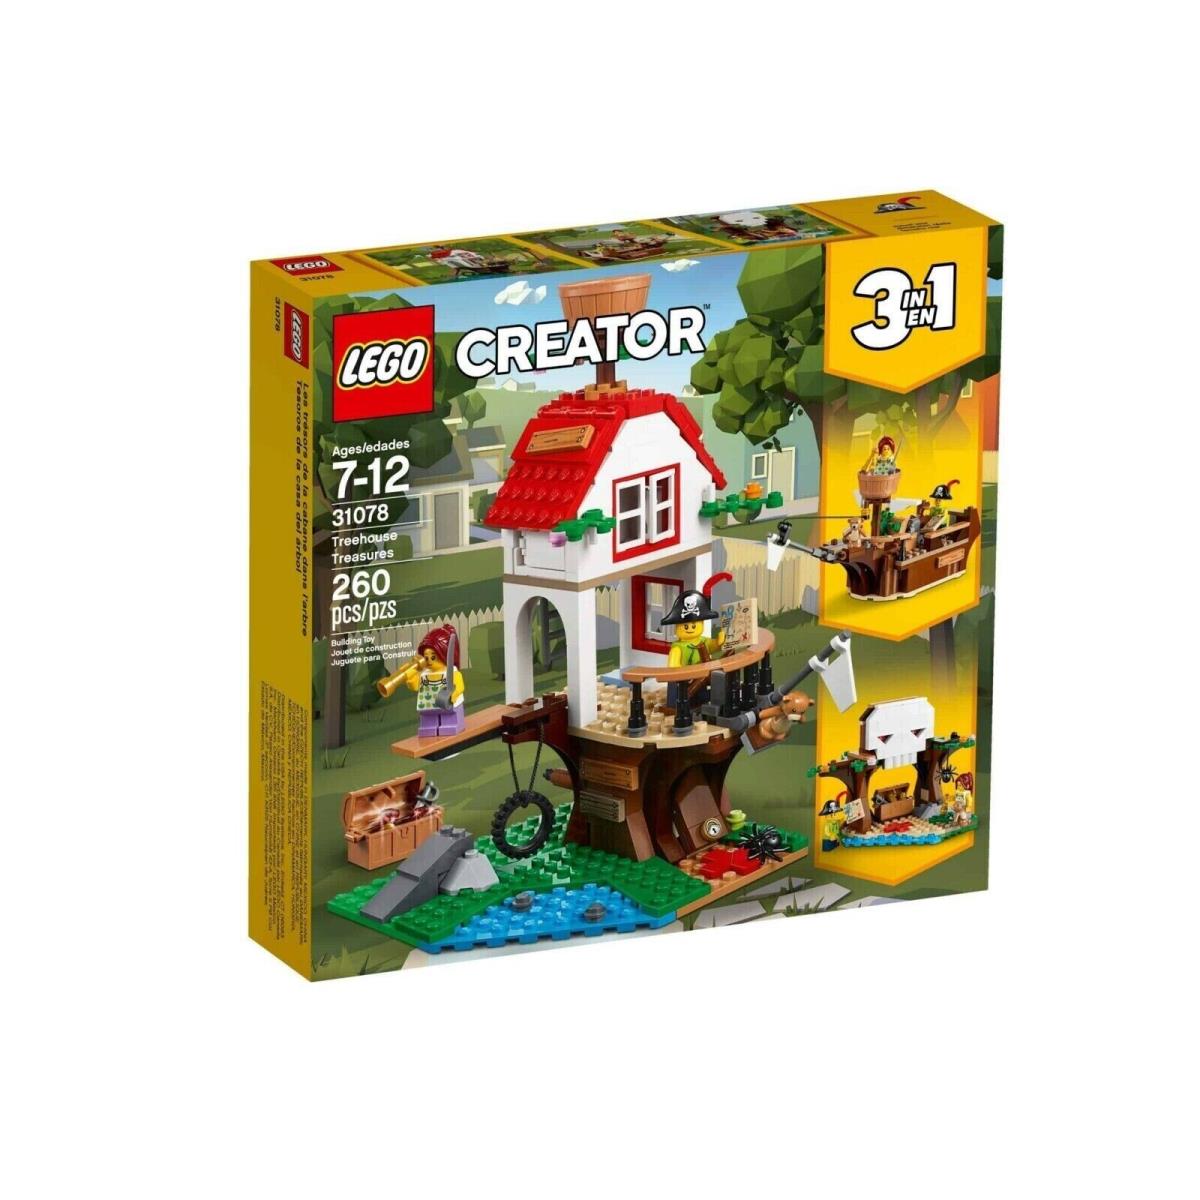 Lego Creator 3-in-1 Treehouse Treasures Set 31078